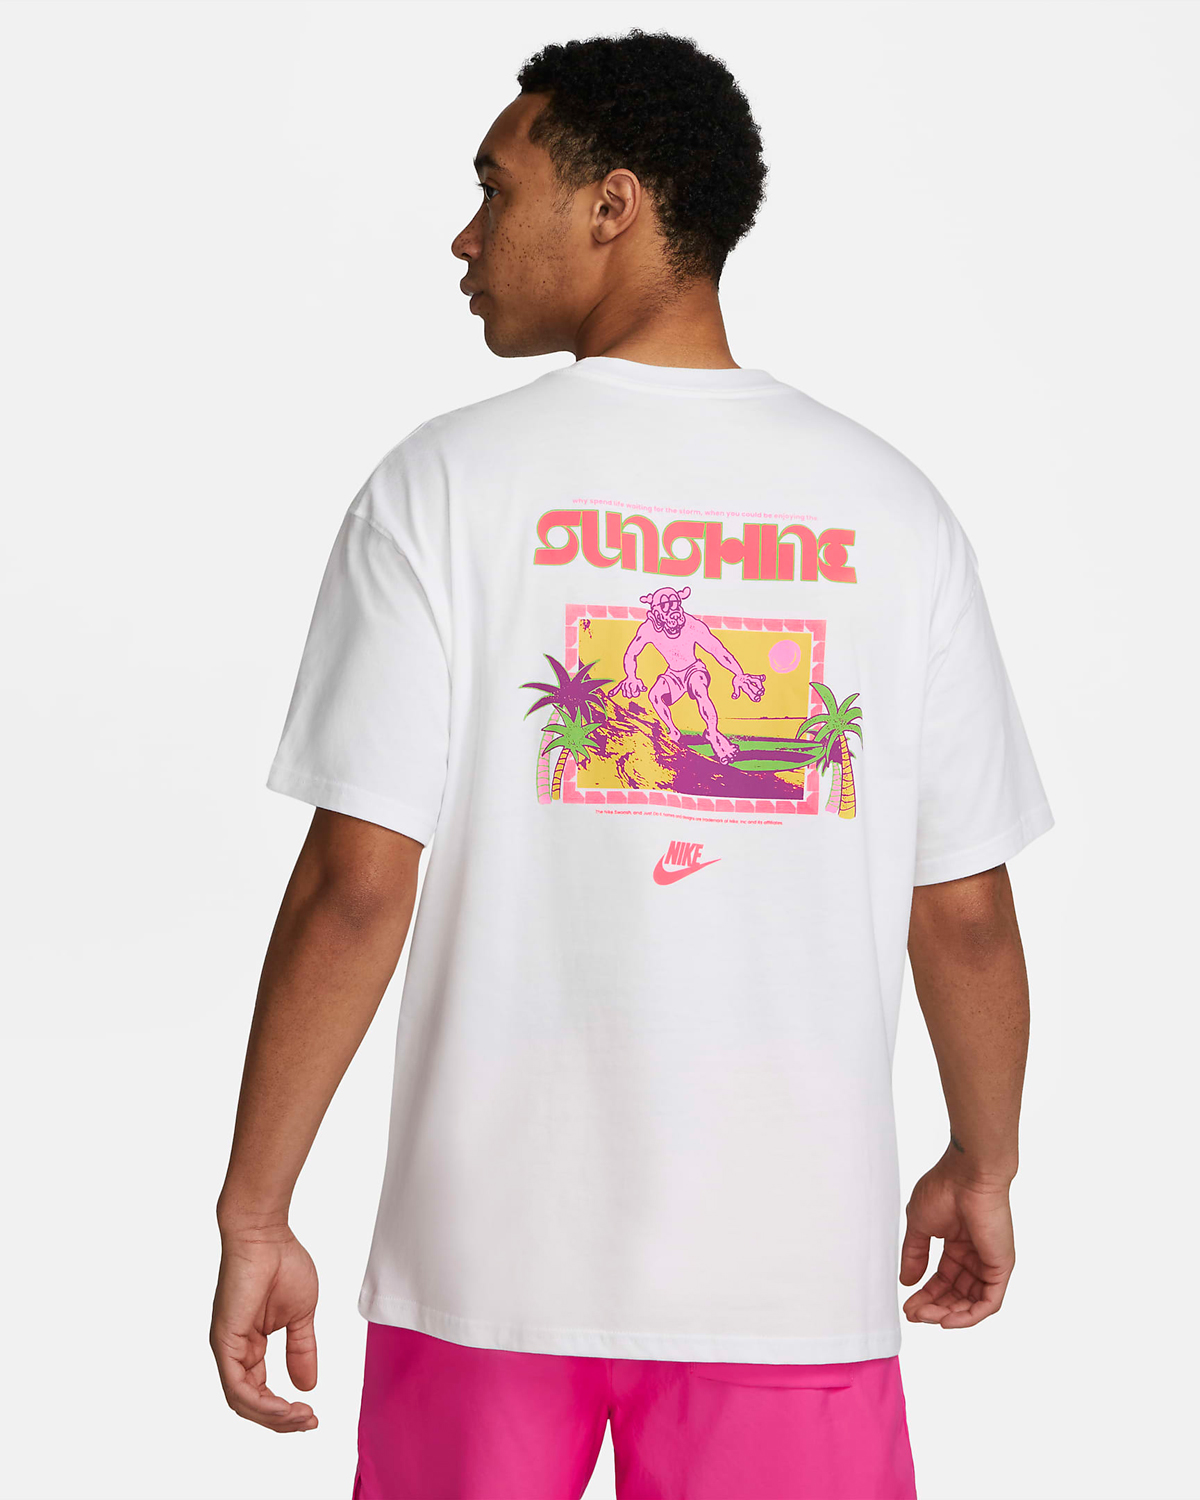 Nike-Sportswear-Sunshine-T-Shirt-White-Pink-2